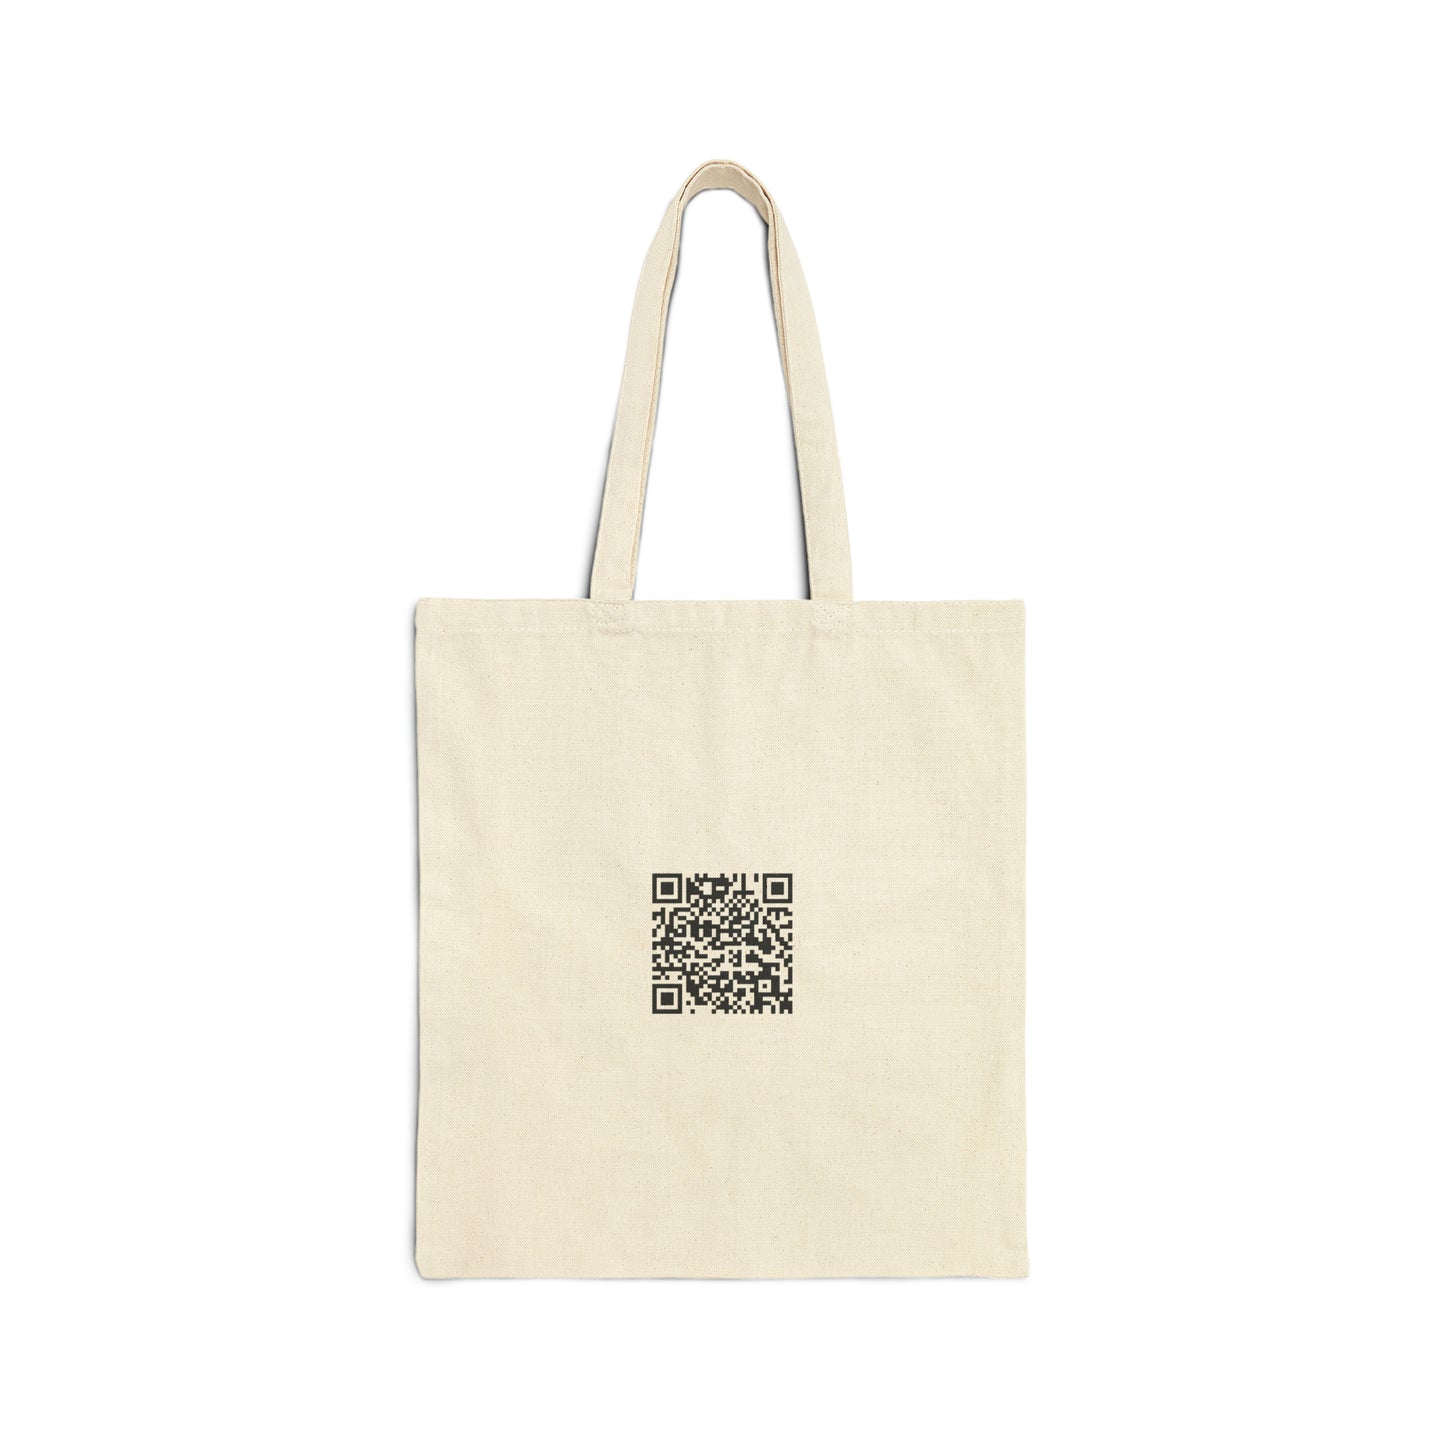 Silents To Digitals - Cotton Canvas Tote Bag